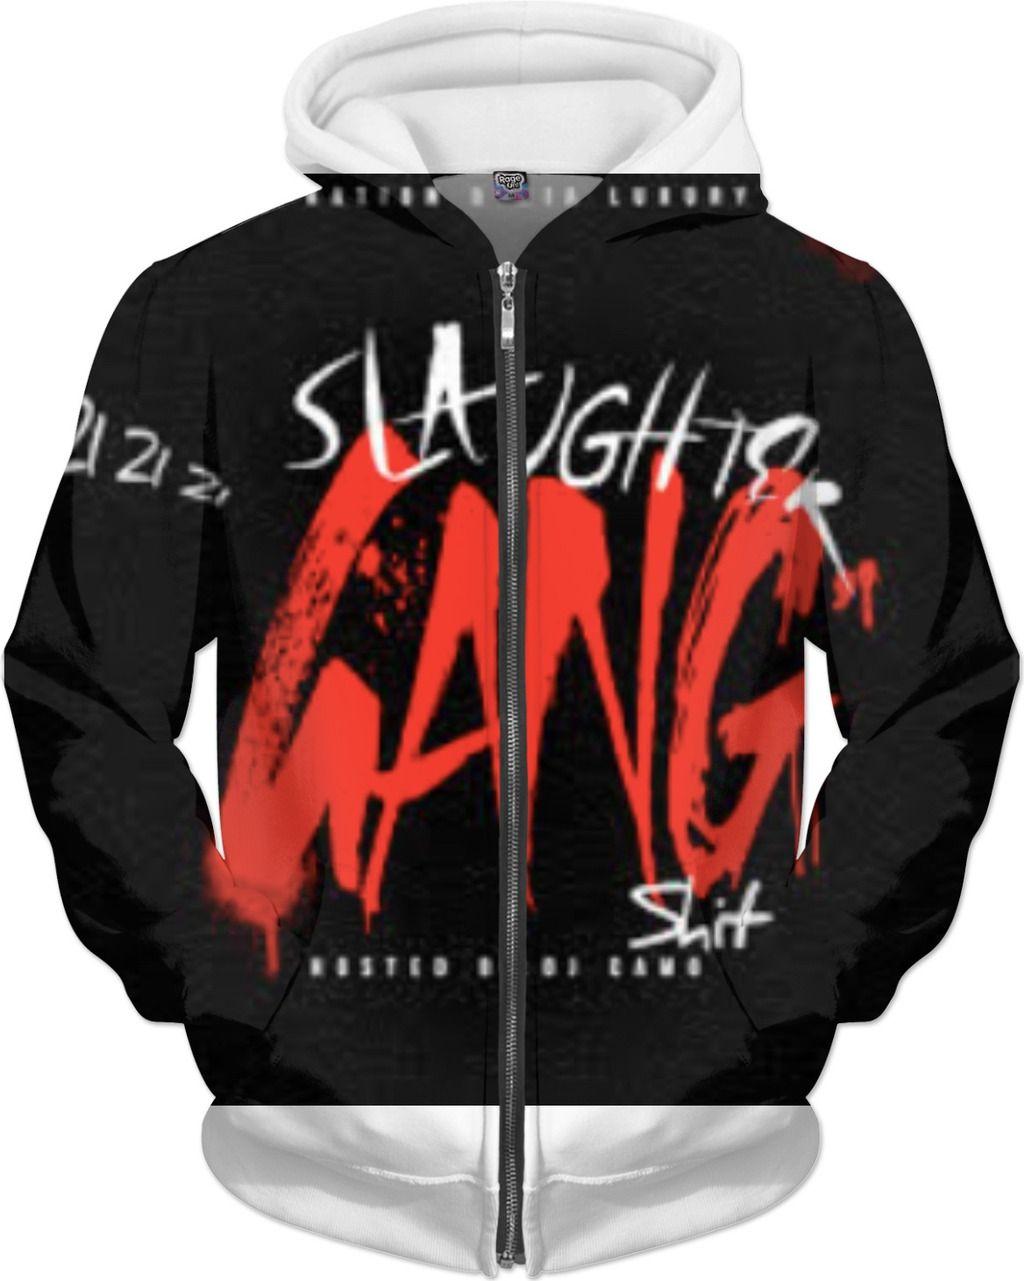 Slaughtergang Logo - Slaughter GANG SHIT